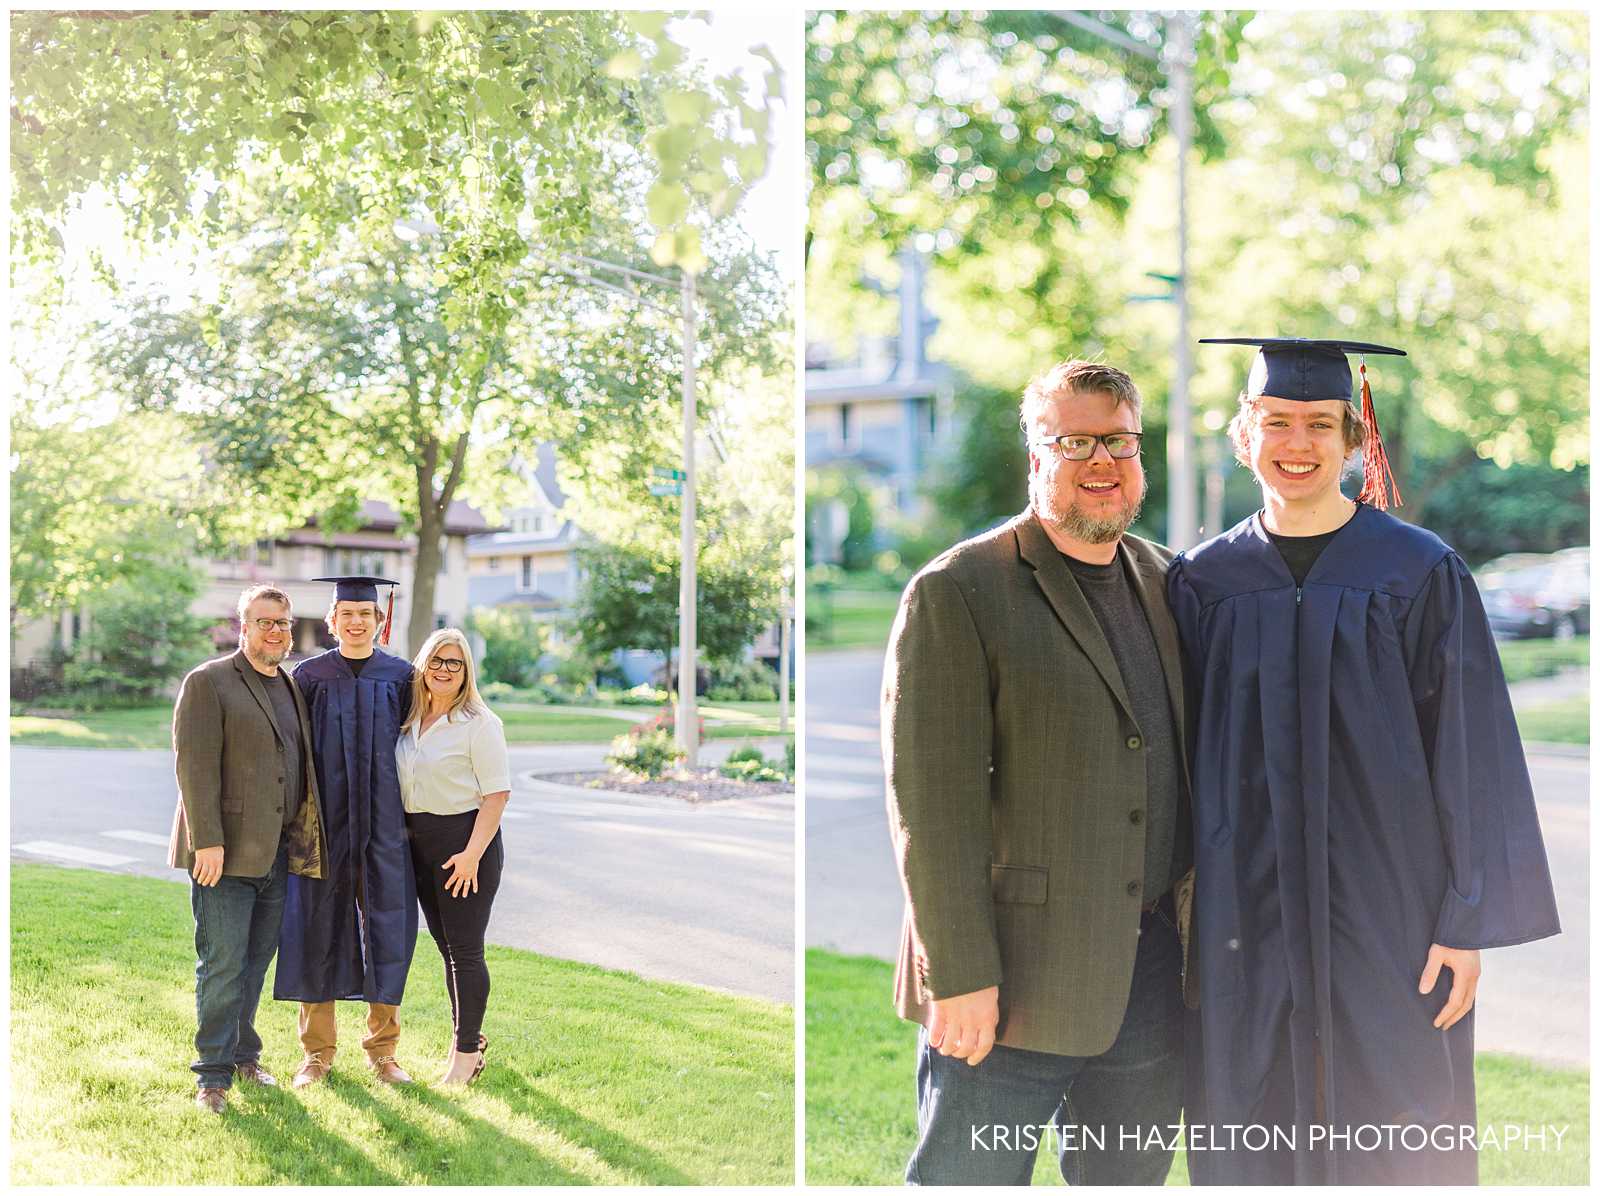 Family photos with high school graduate